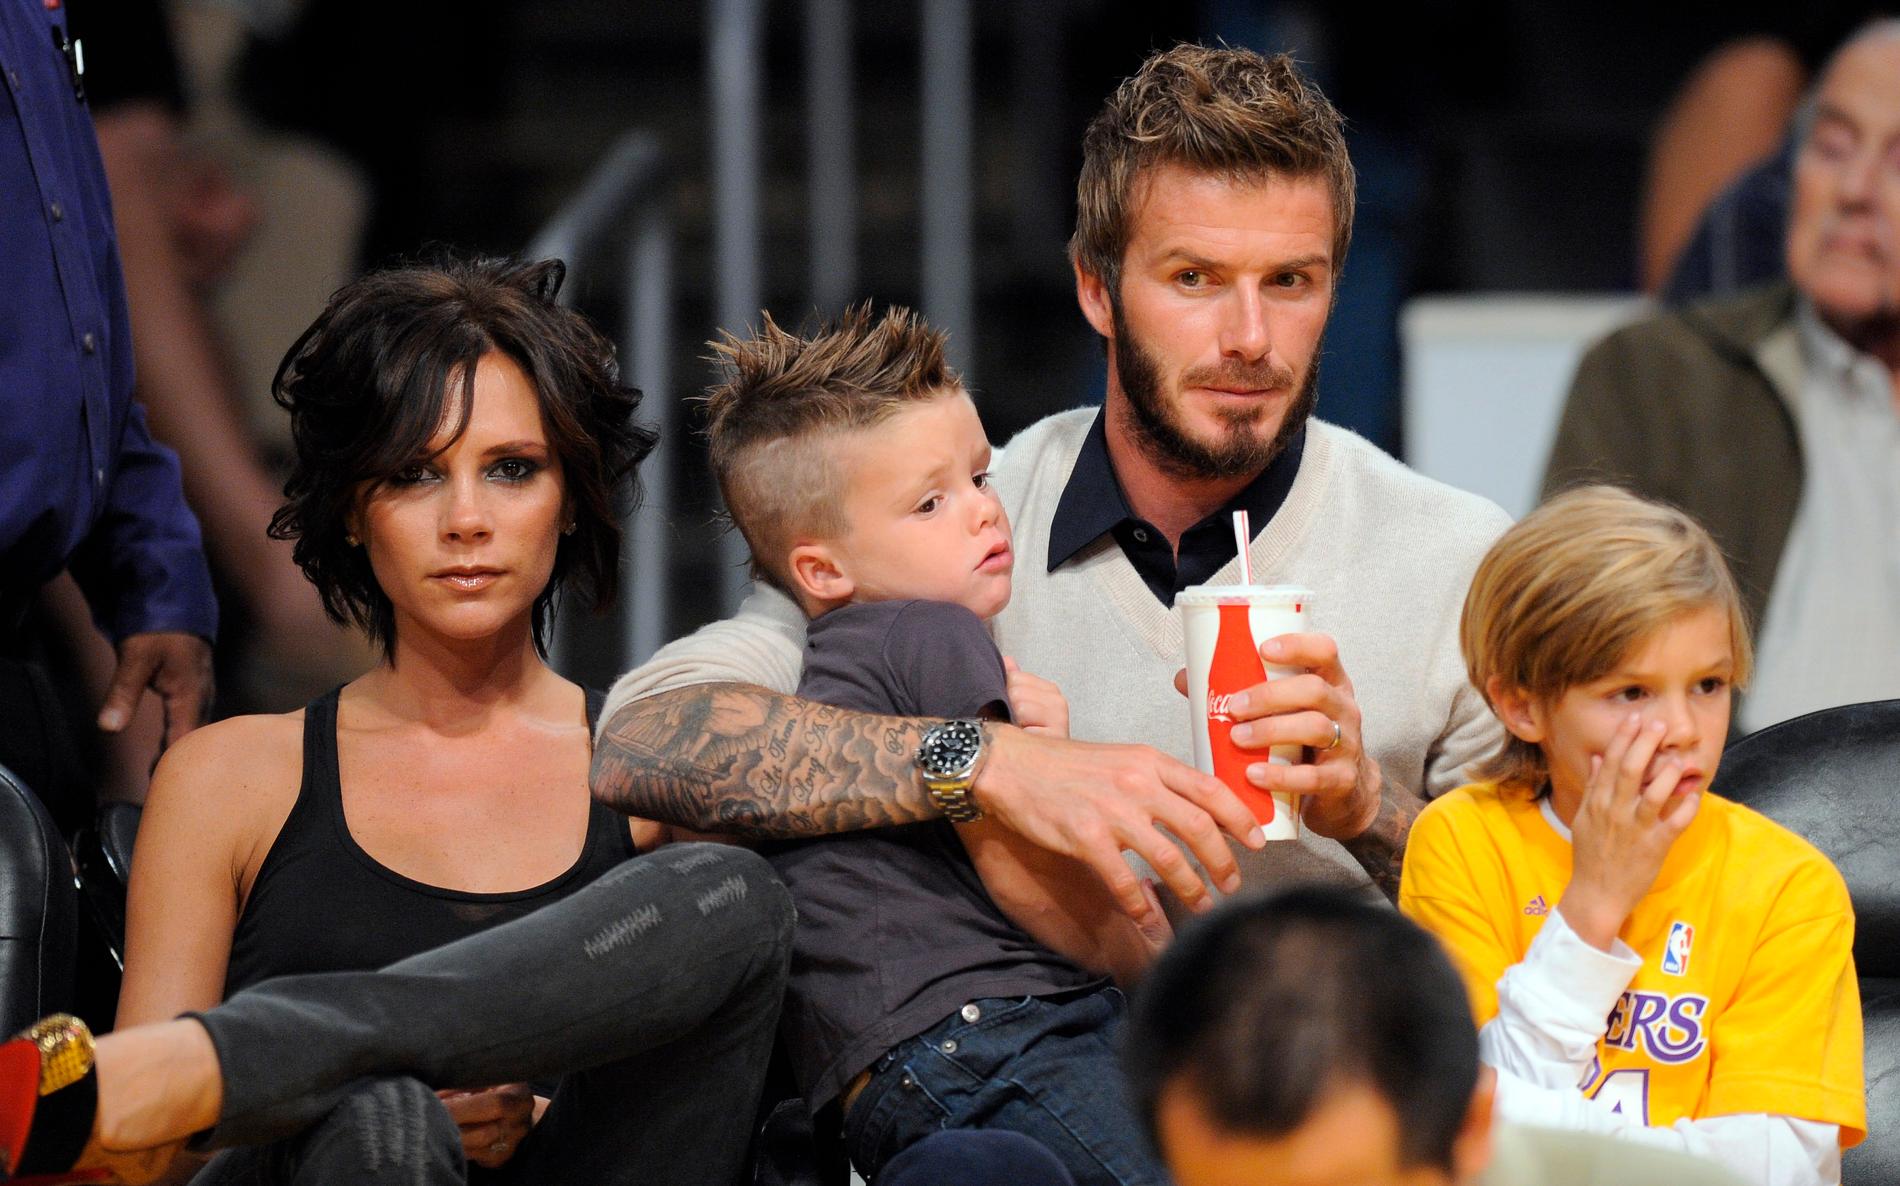 2009 Nästan hela familjen Beckham på basketmatch.